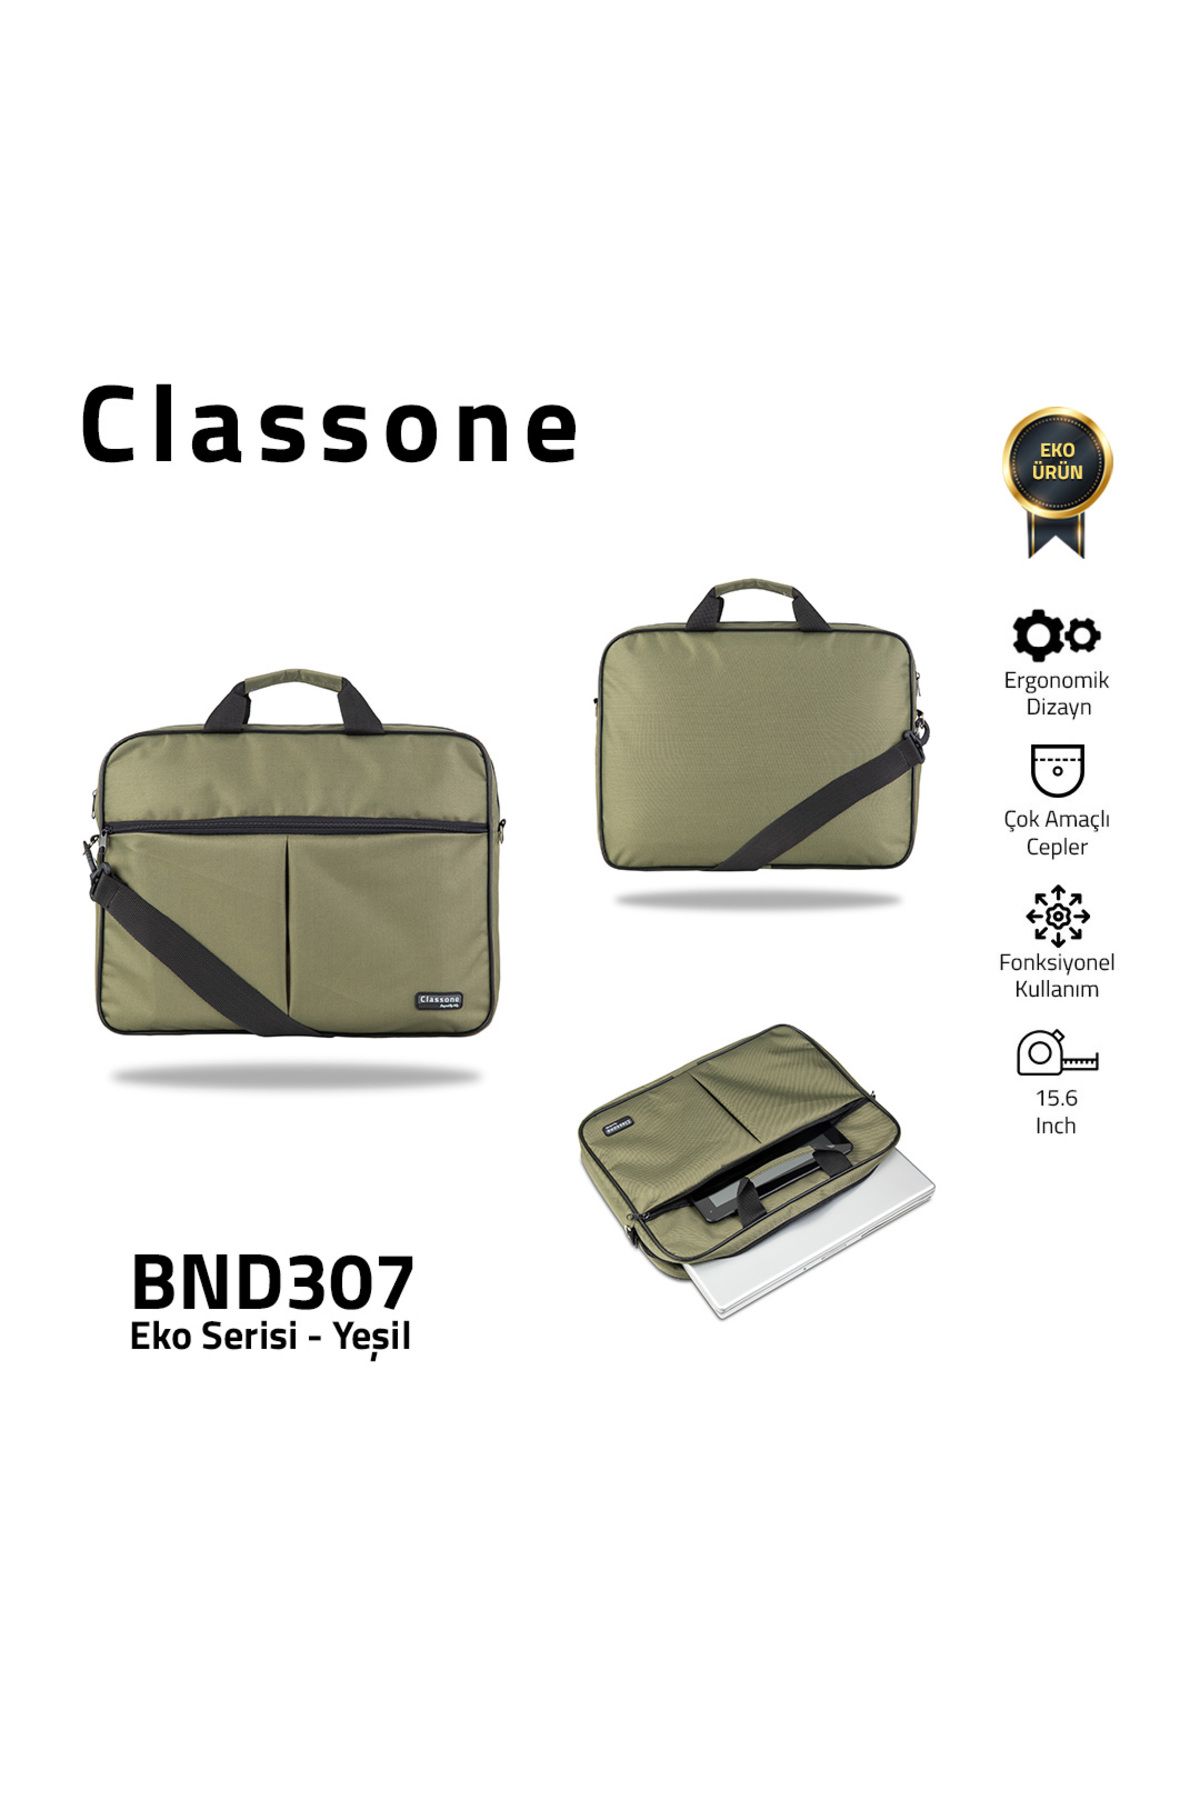 Classone BND307 Eko Serisi -Yeşil